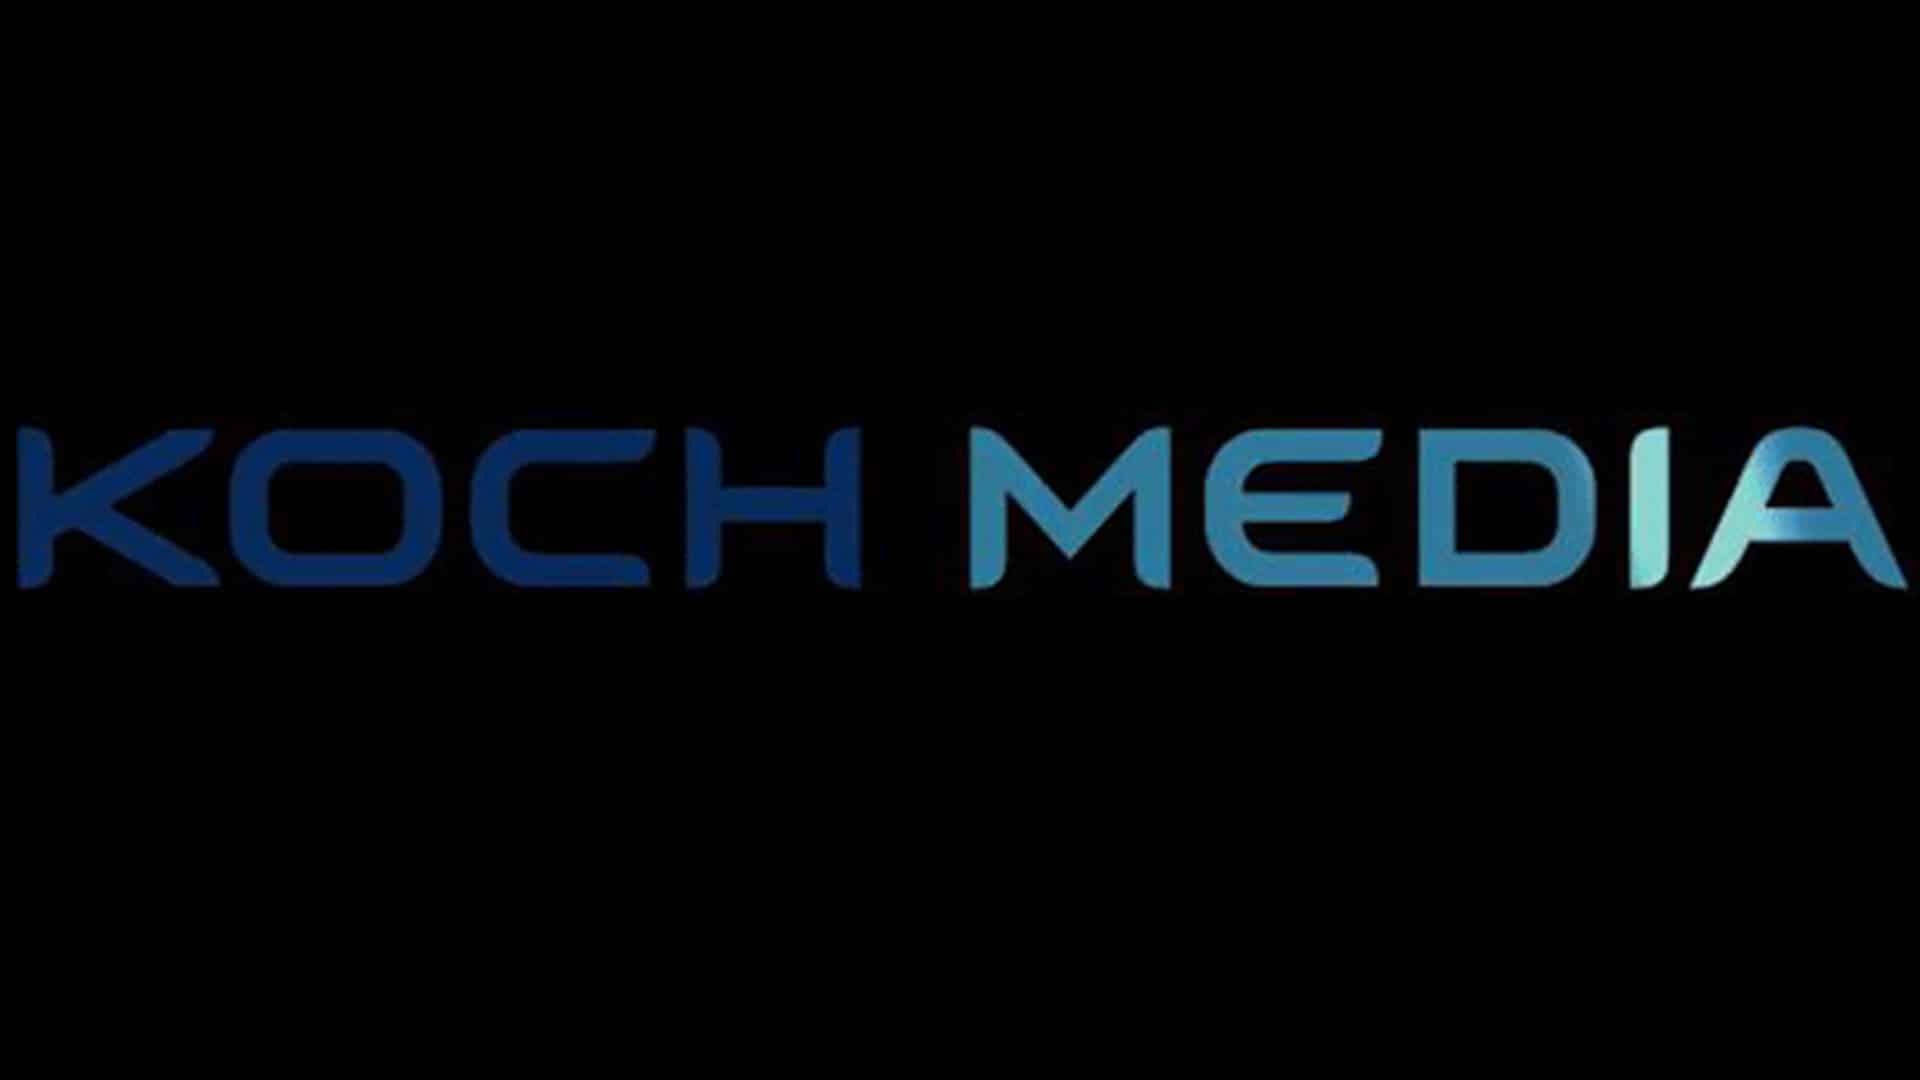 Koch Media lancia Anime Factory point: ecco tutti i dettagli